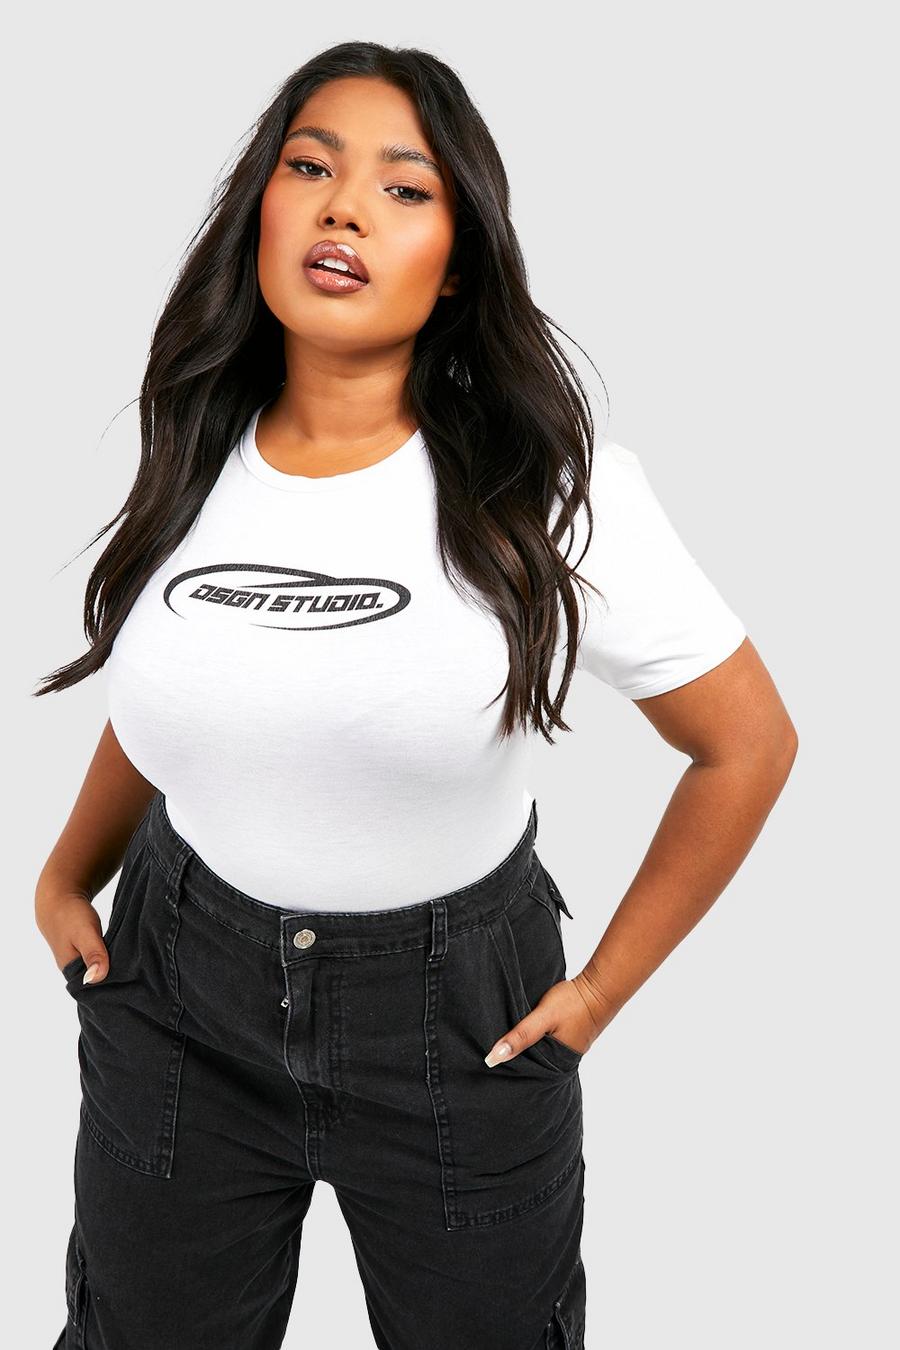 T-shirt Plus Size sagomata con logo Dsgn Studio, Charcoal